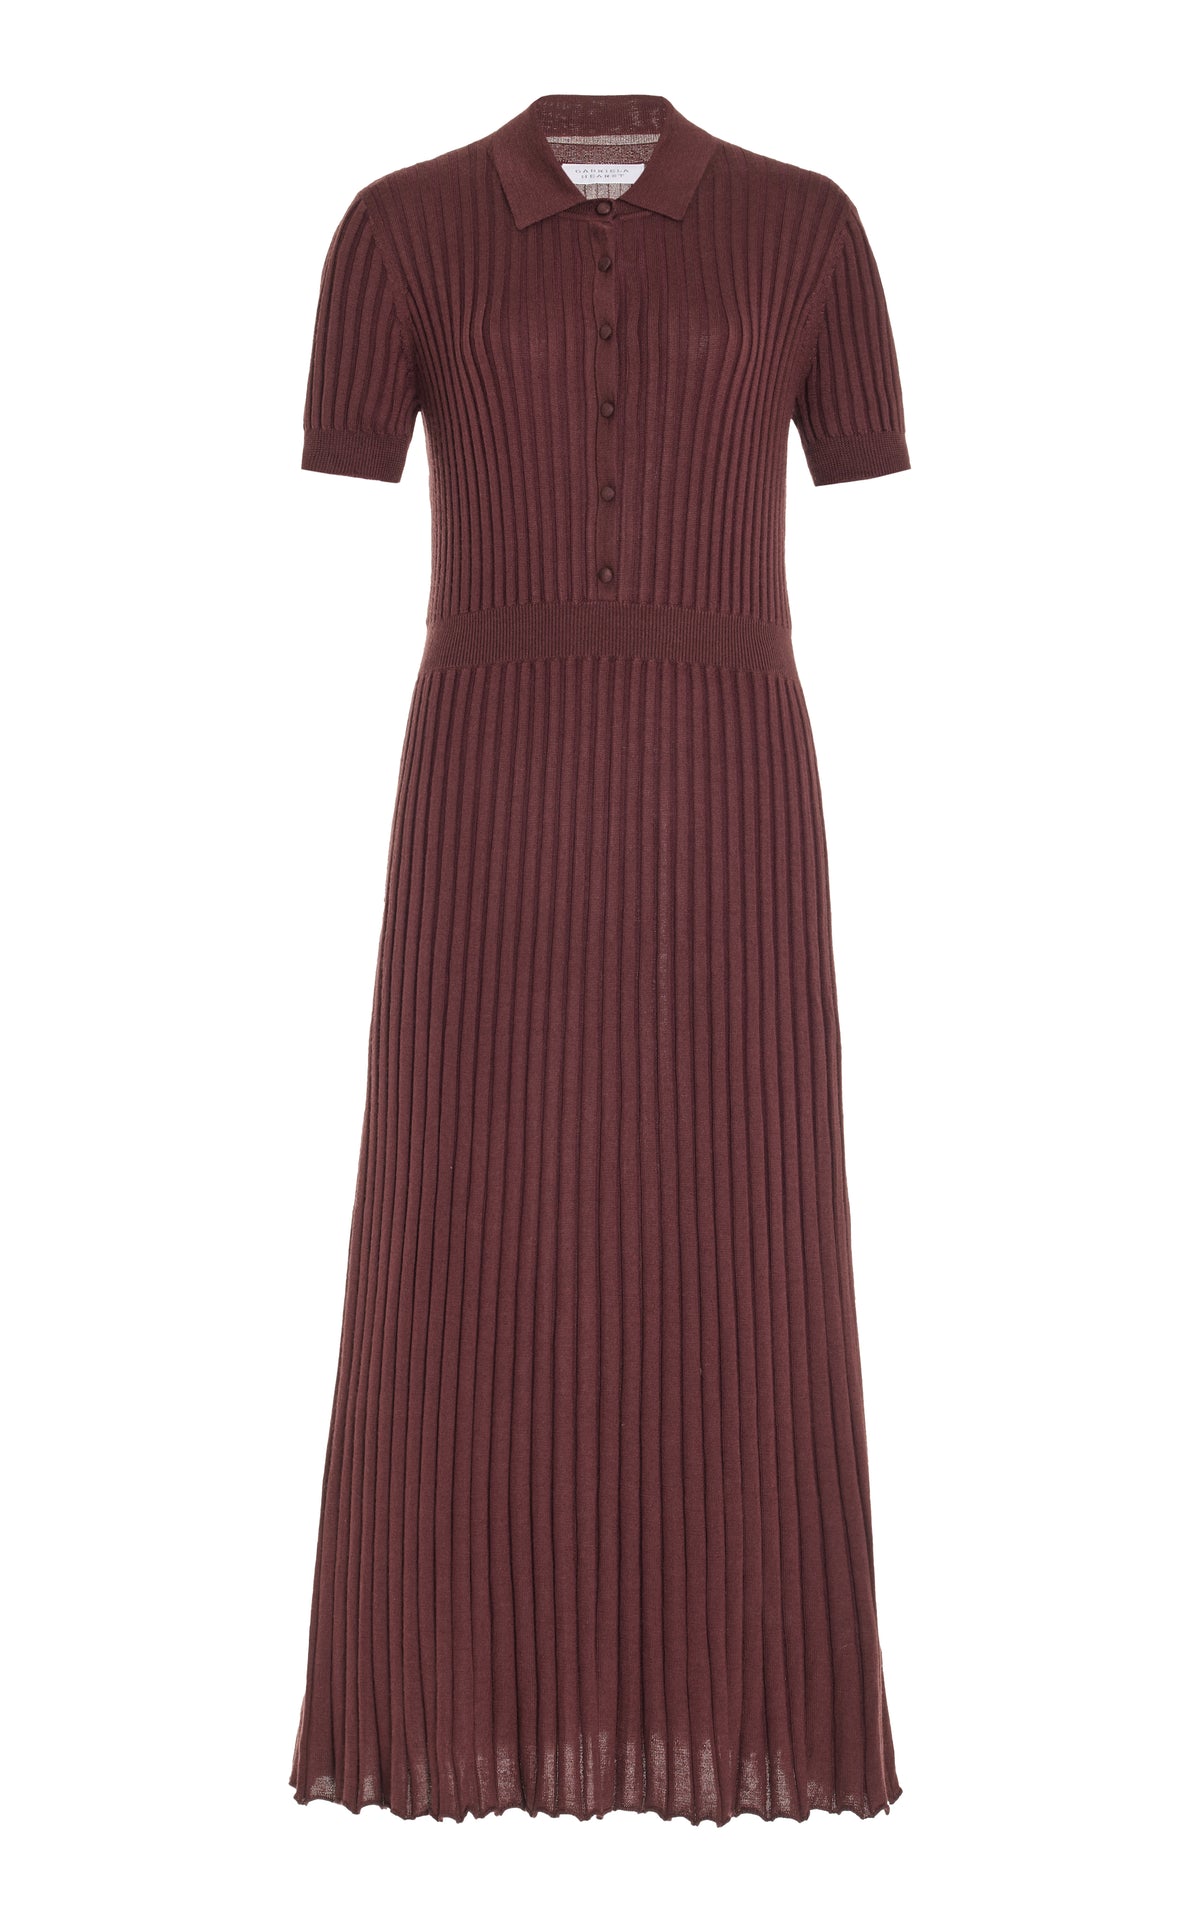 Amor Knit Dress in Deep Bordeaux Cashmere Silk